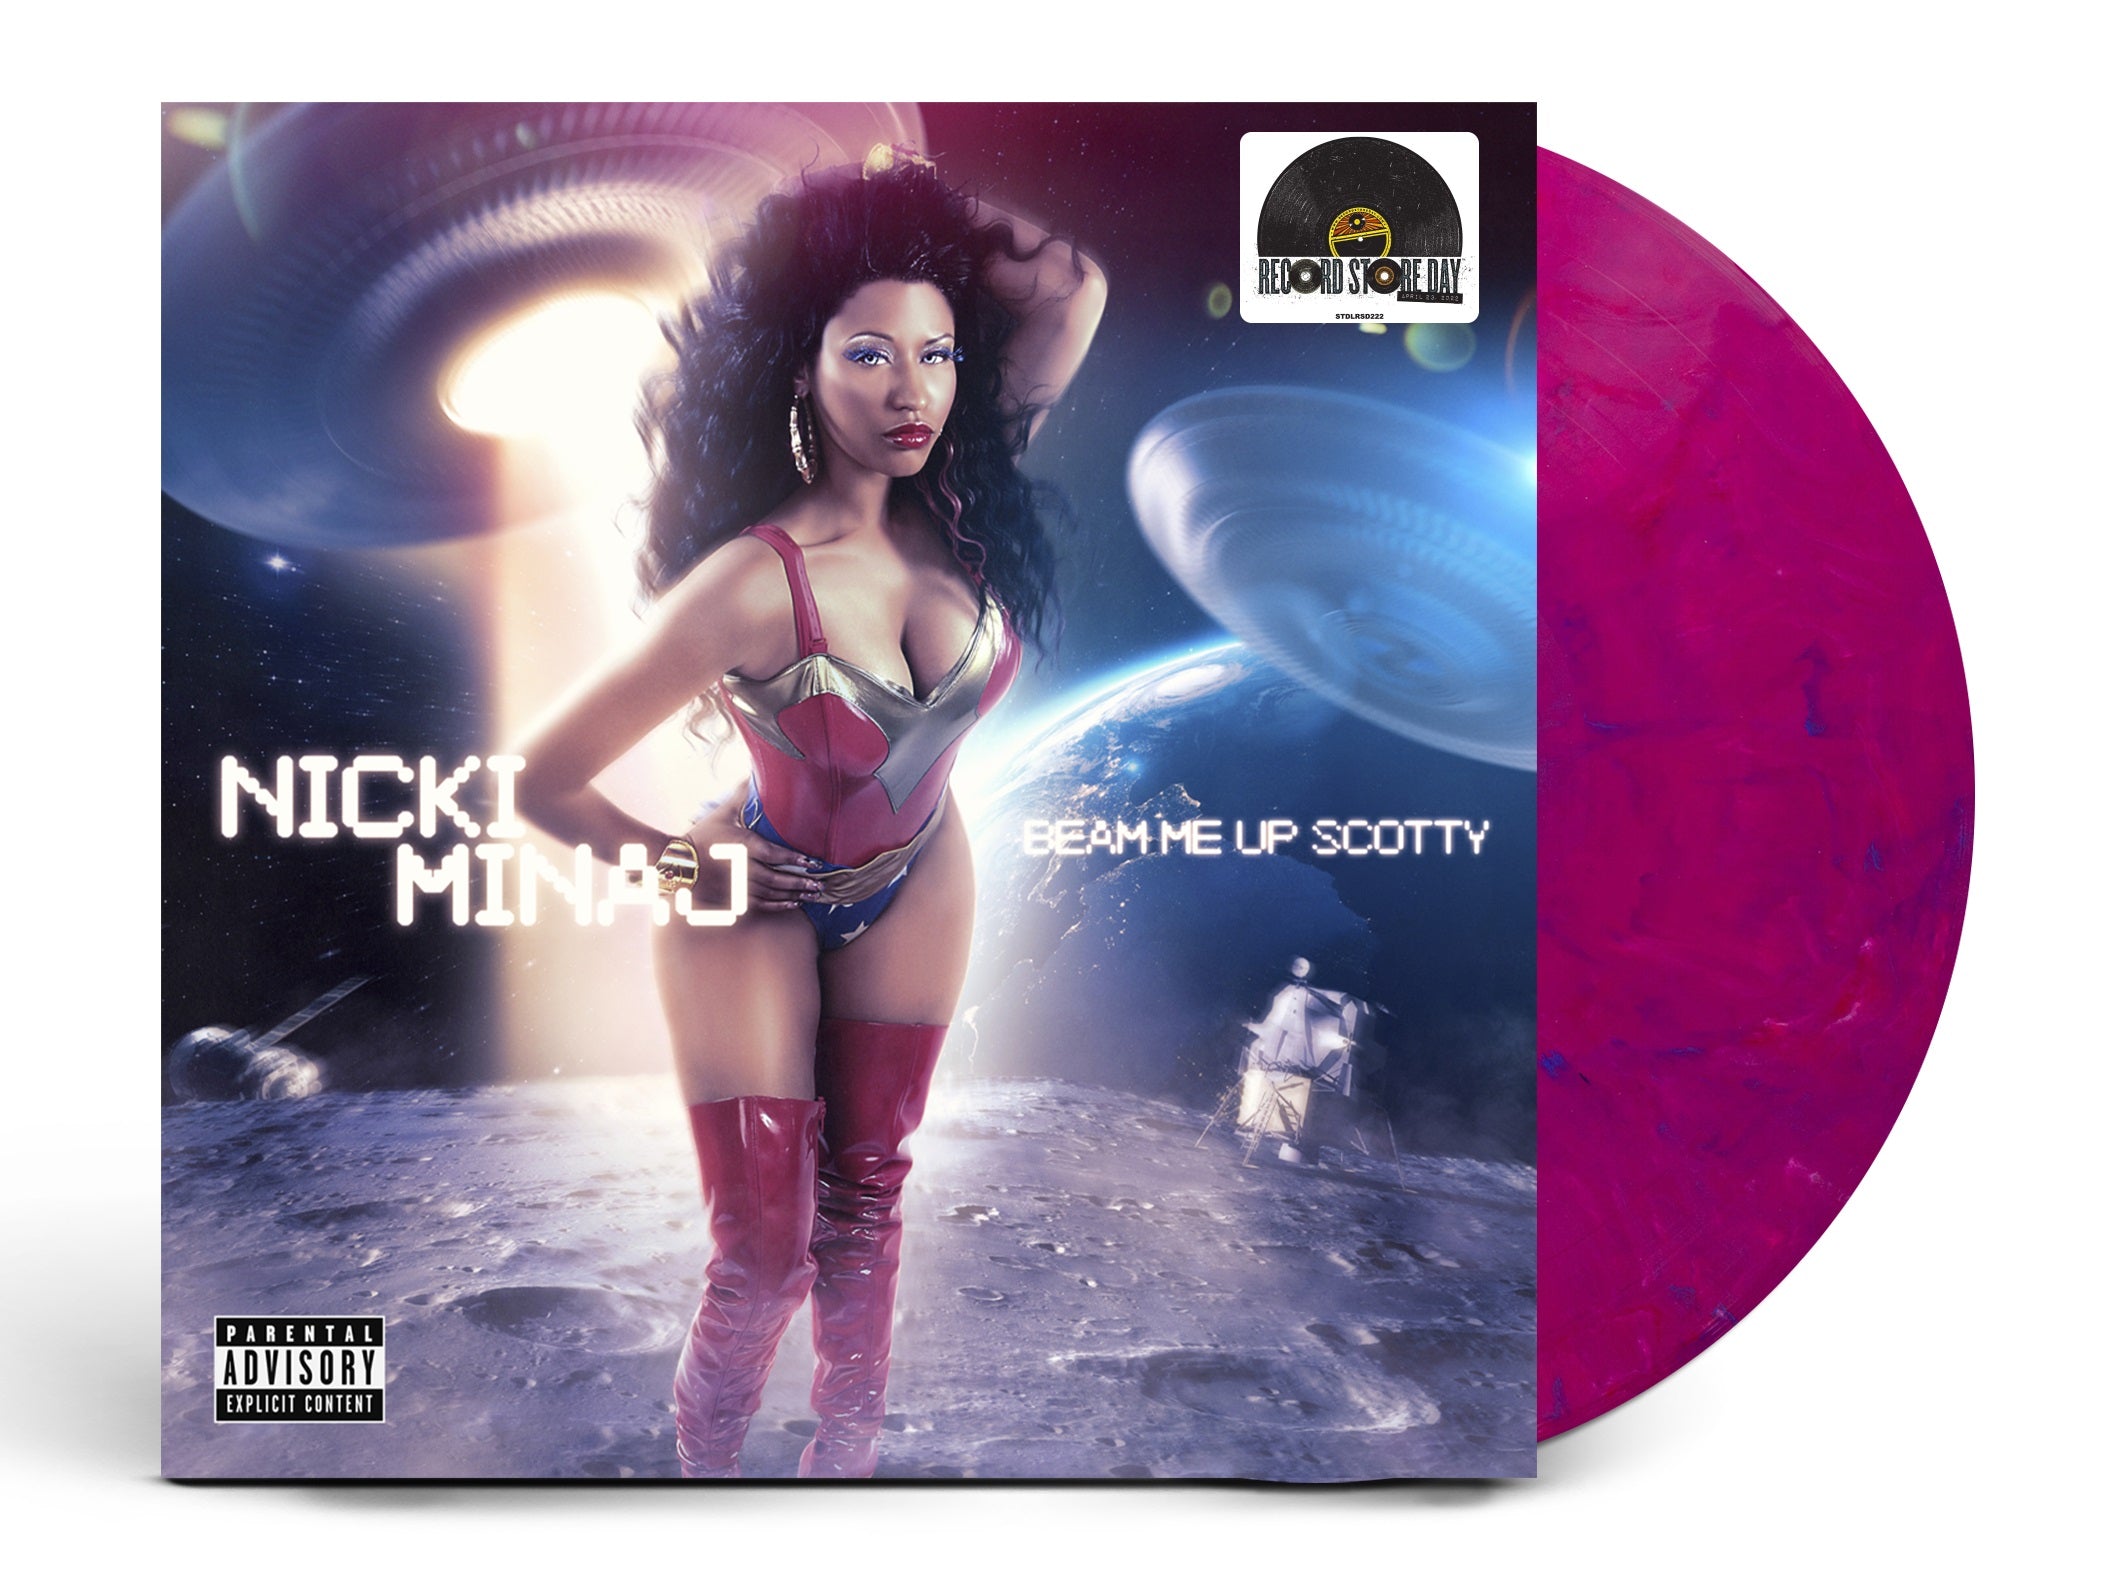 Nicki Minaj - Beam Me Up Scotty [Dragon Fruit Colored Vinyl]